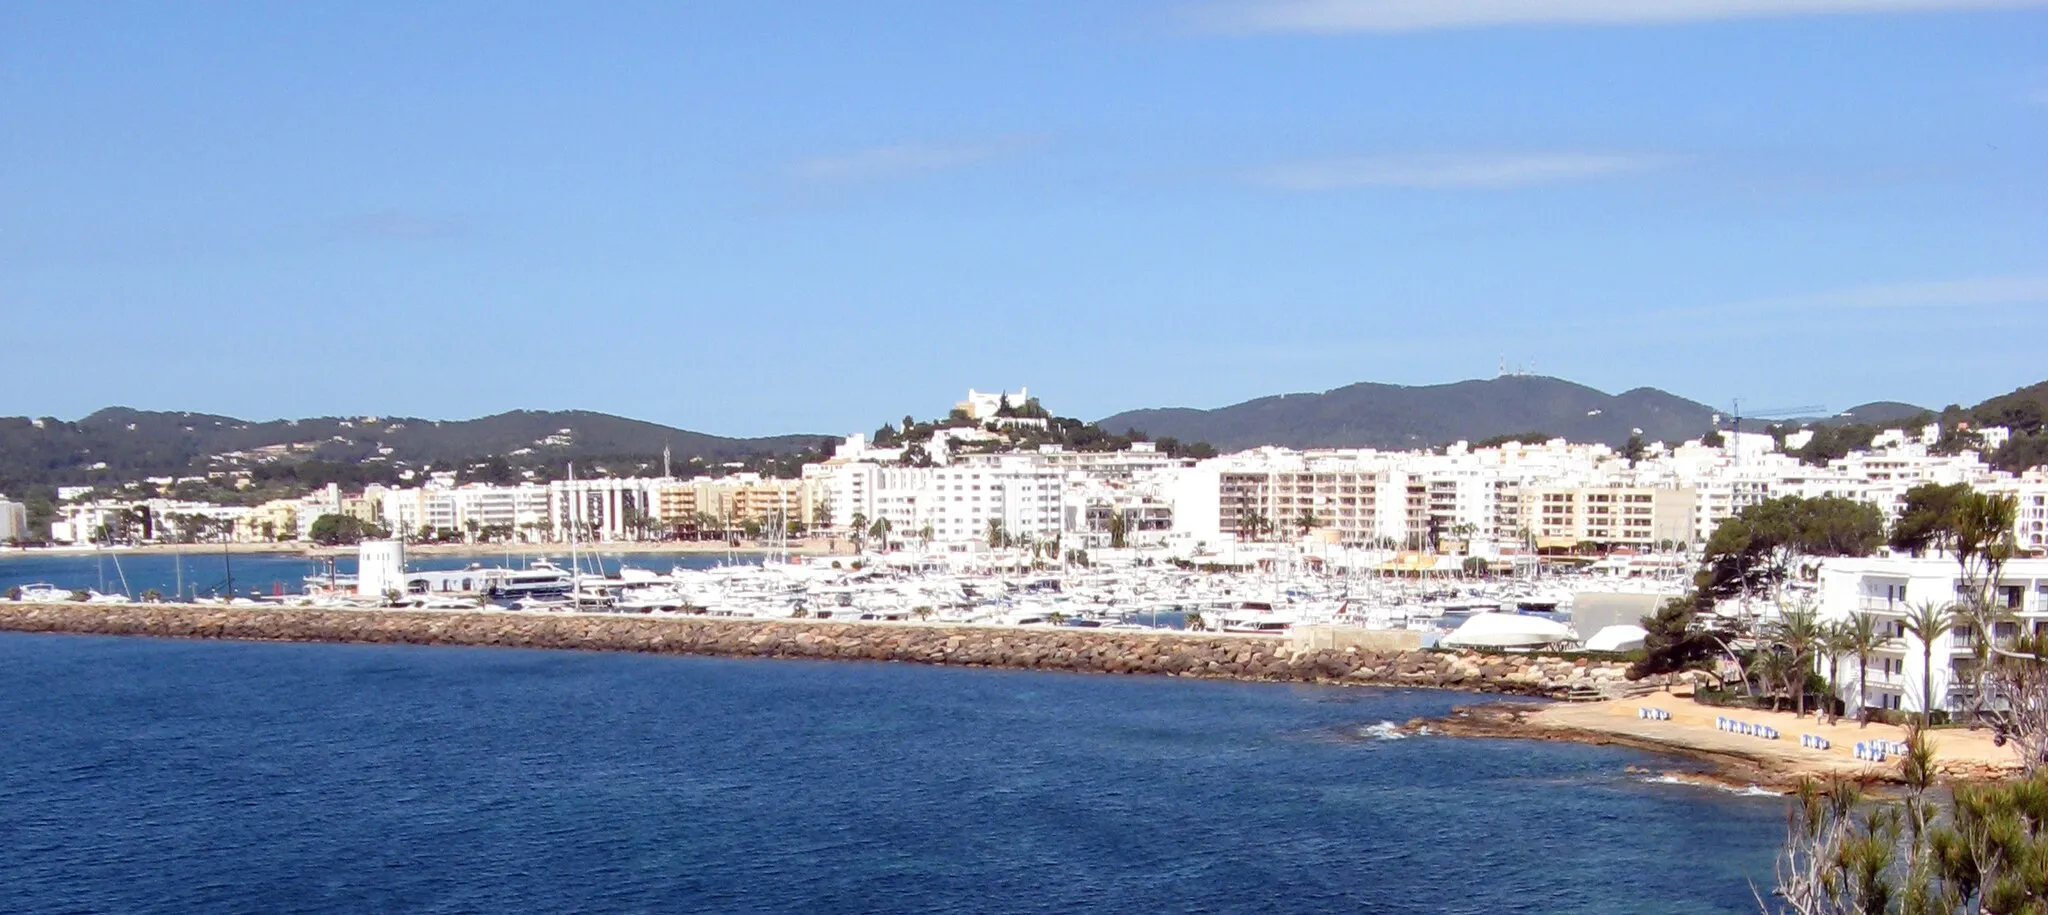 Imagen de Illes Balears